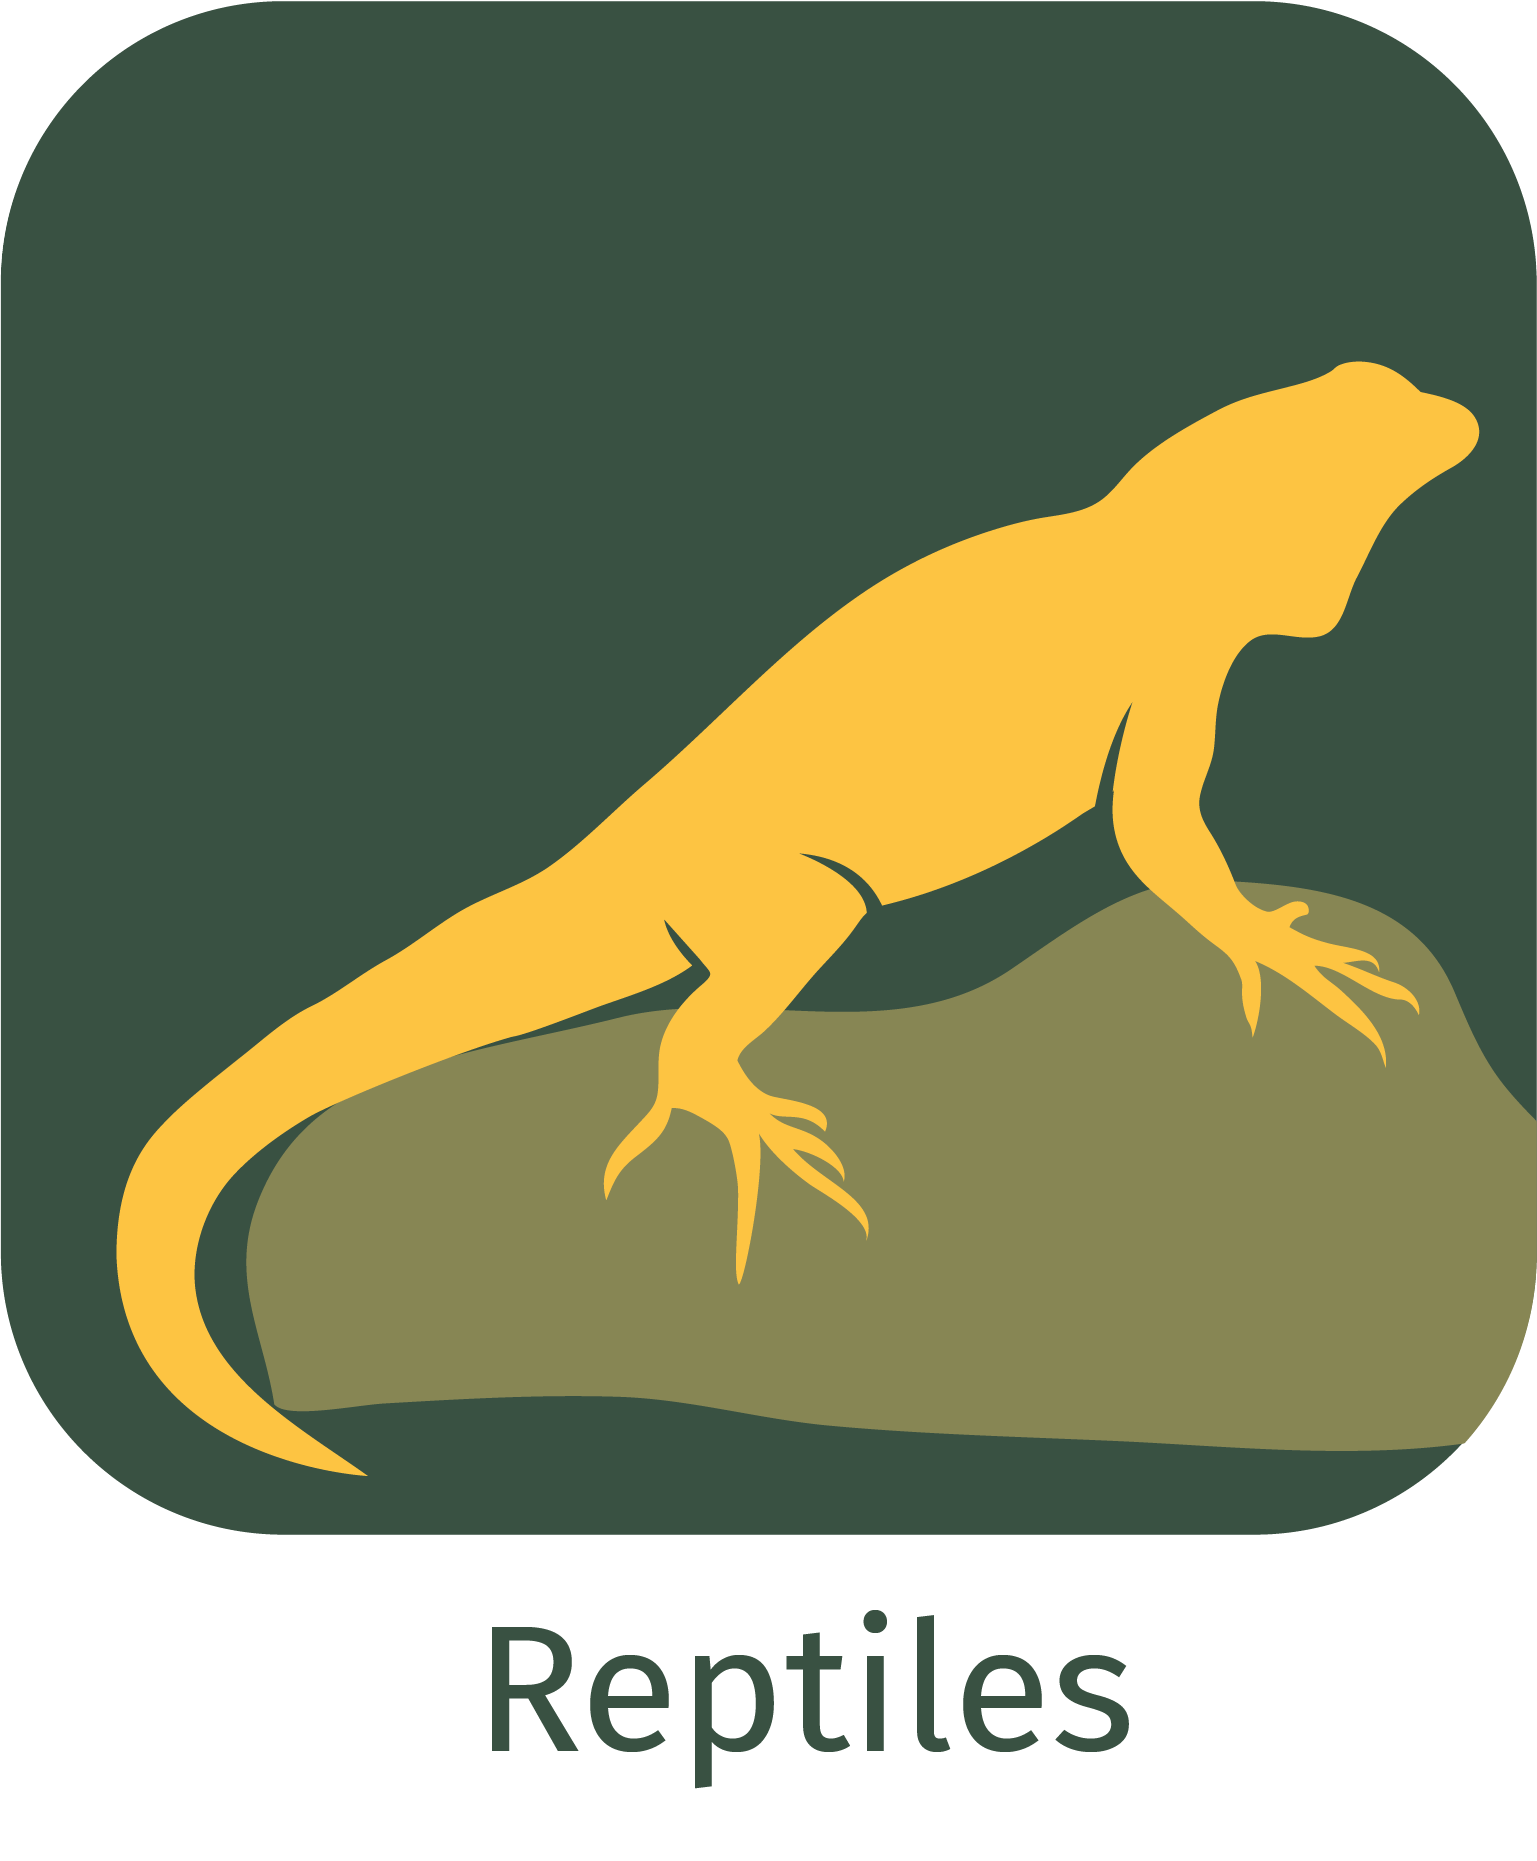 reptiles app icon